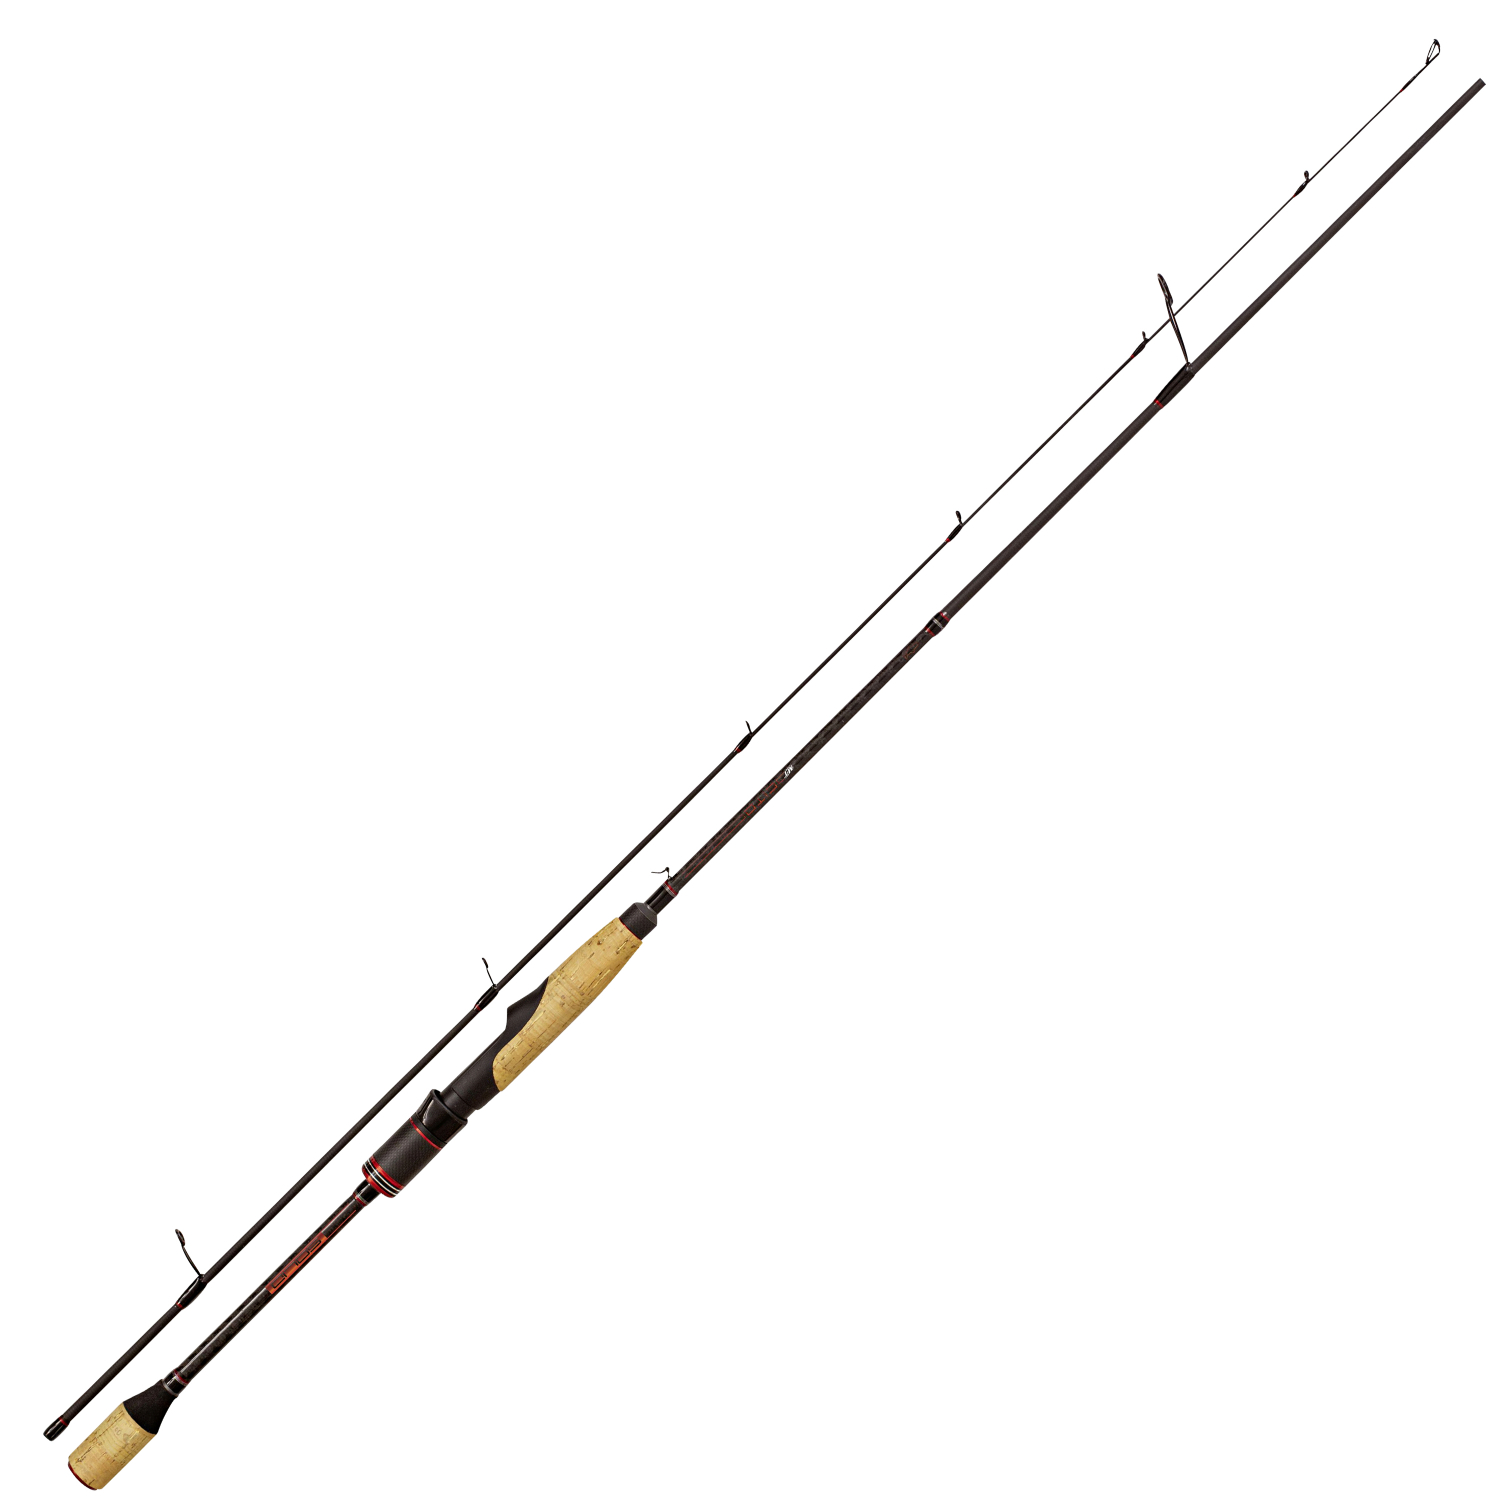 https://images.askari-sport.com/en/product/1/large/magic-trout-fishing-rod-cito-solid.jpg